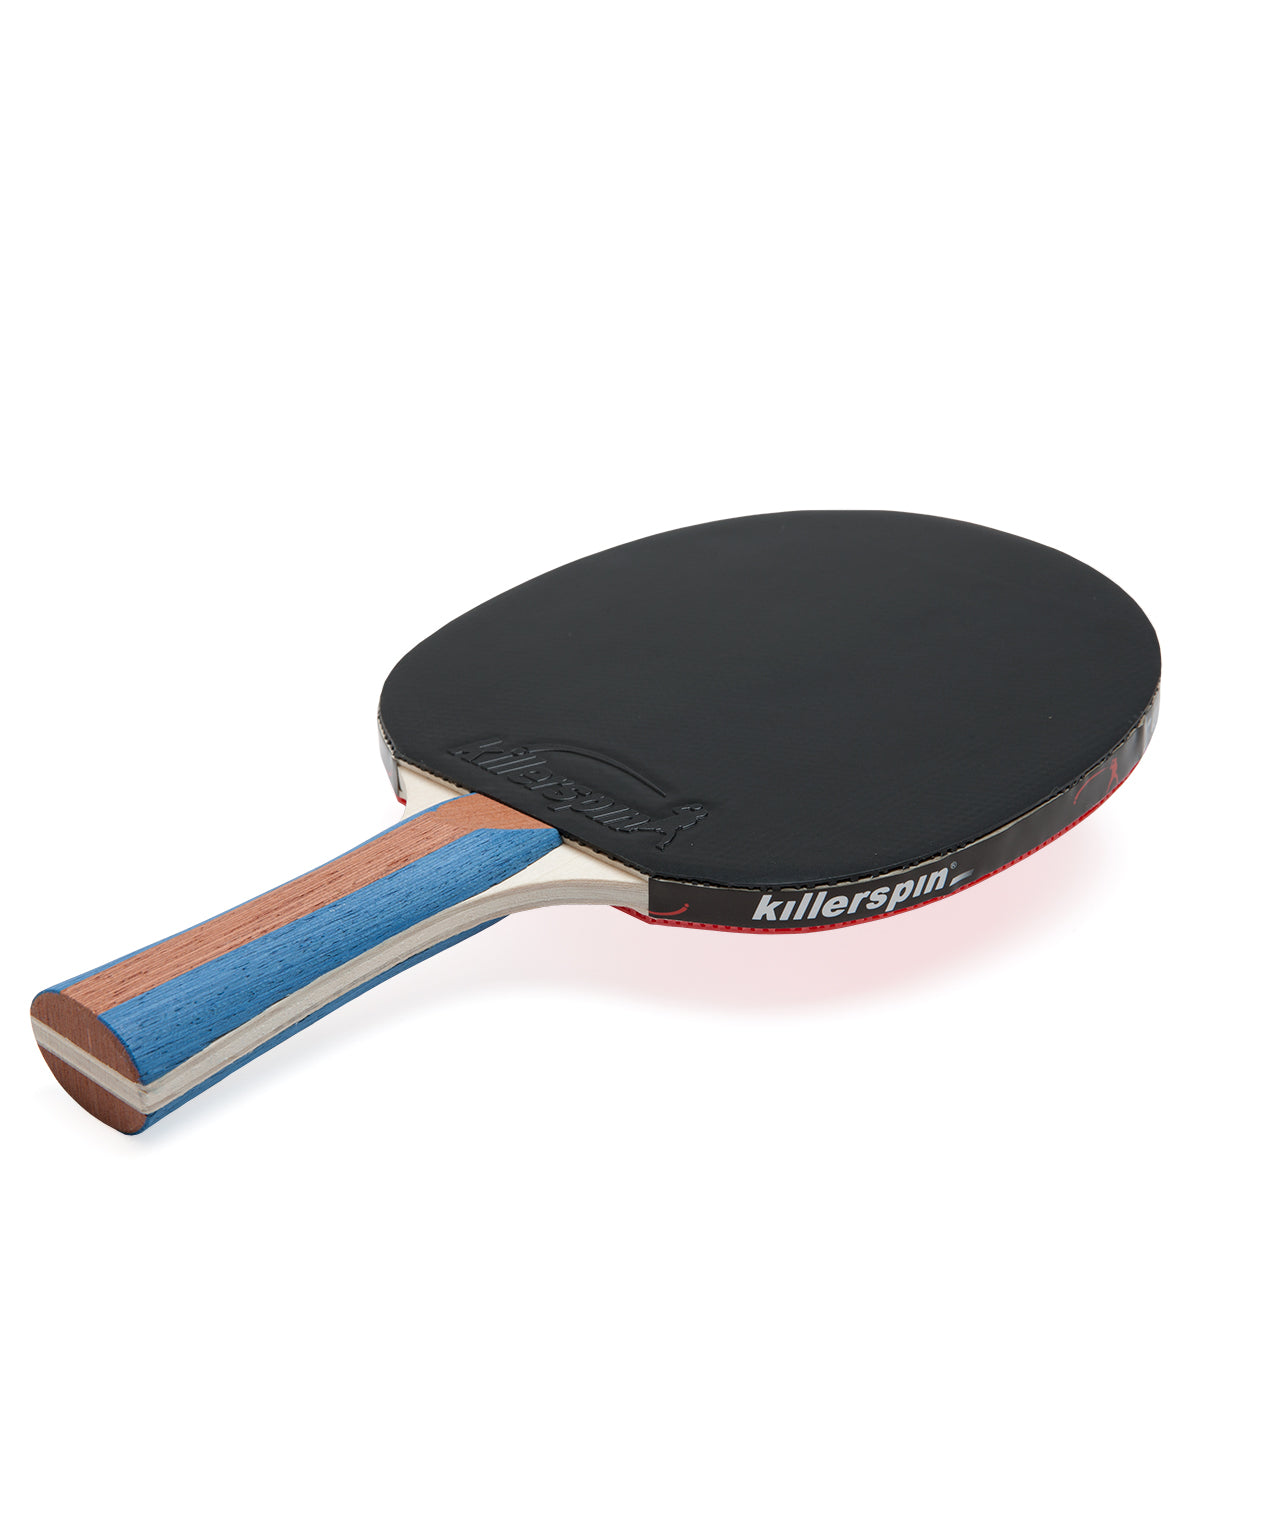 Killerspin Ping Pong Paddle Set JetSet4 Premium - Black Rubber